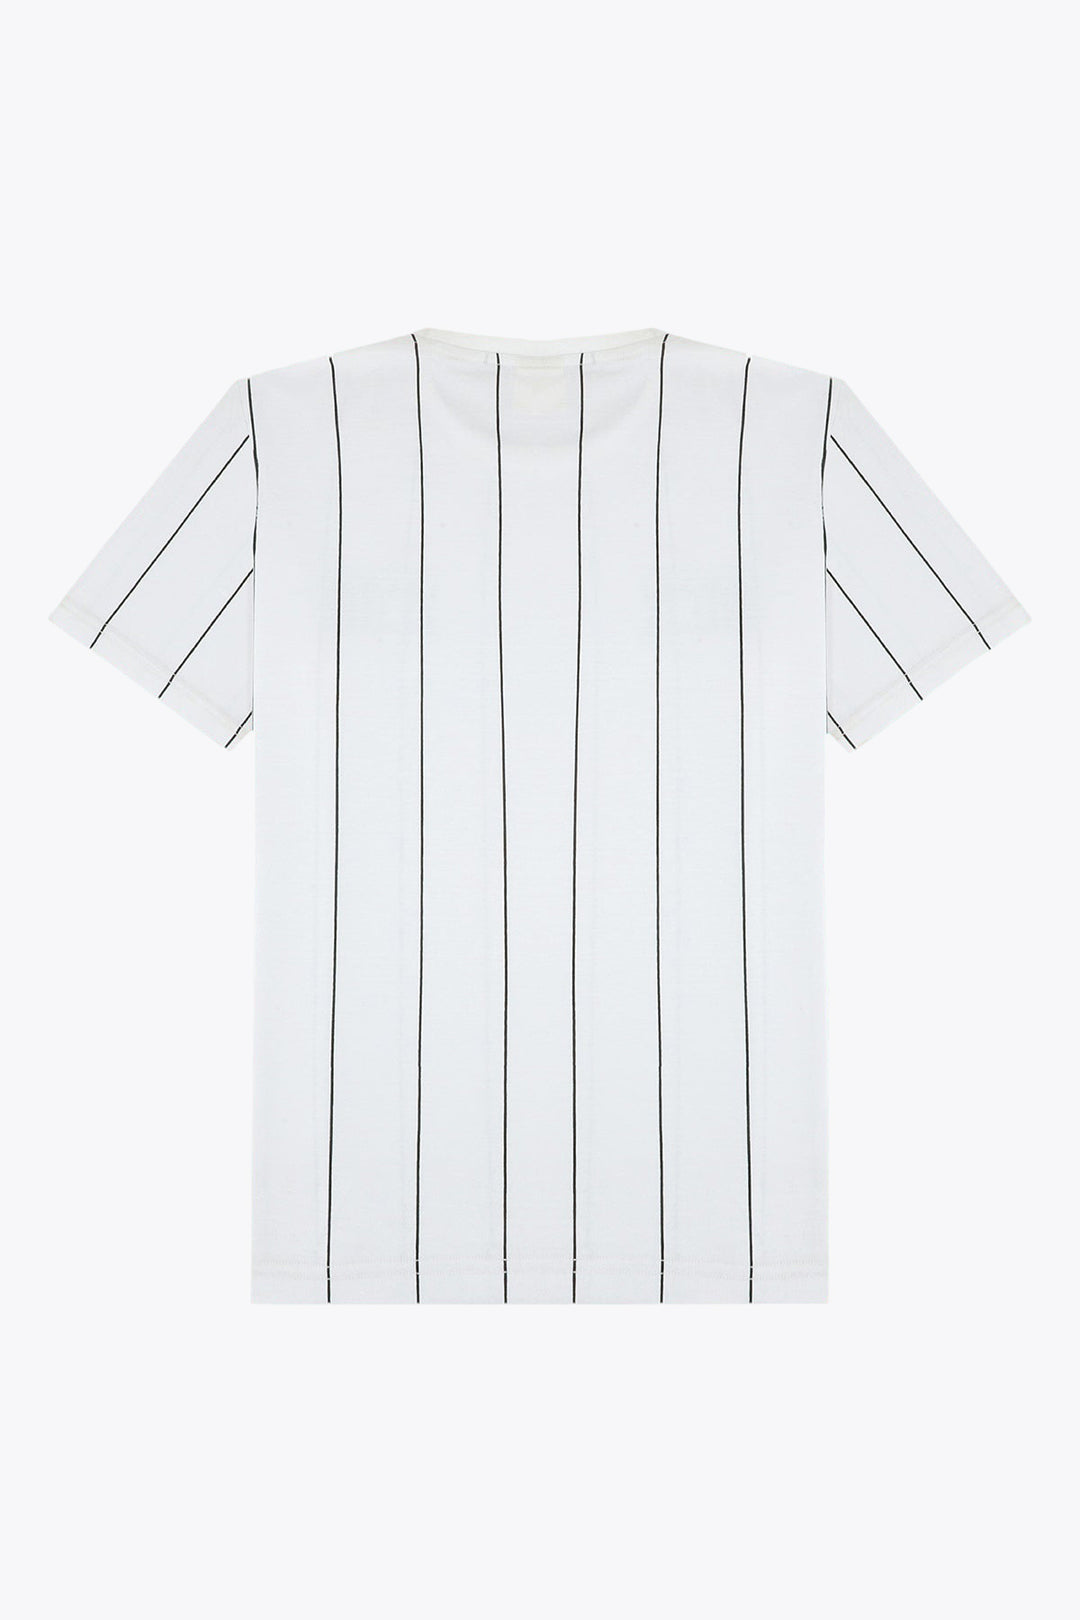 White Cosmic Printed T-Shirt - S23 - MT0314R